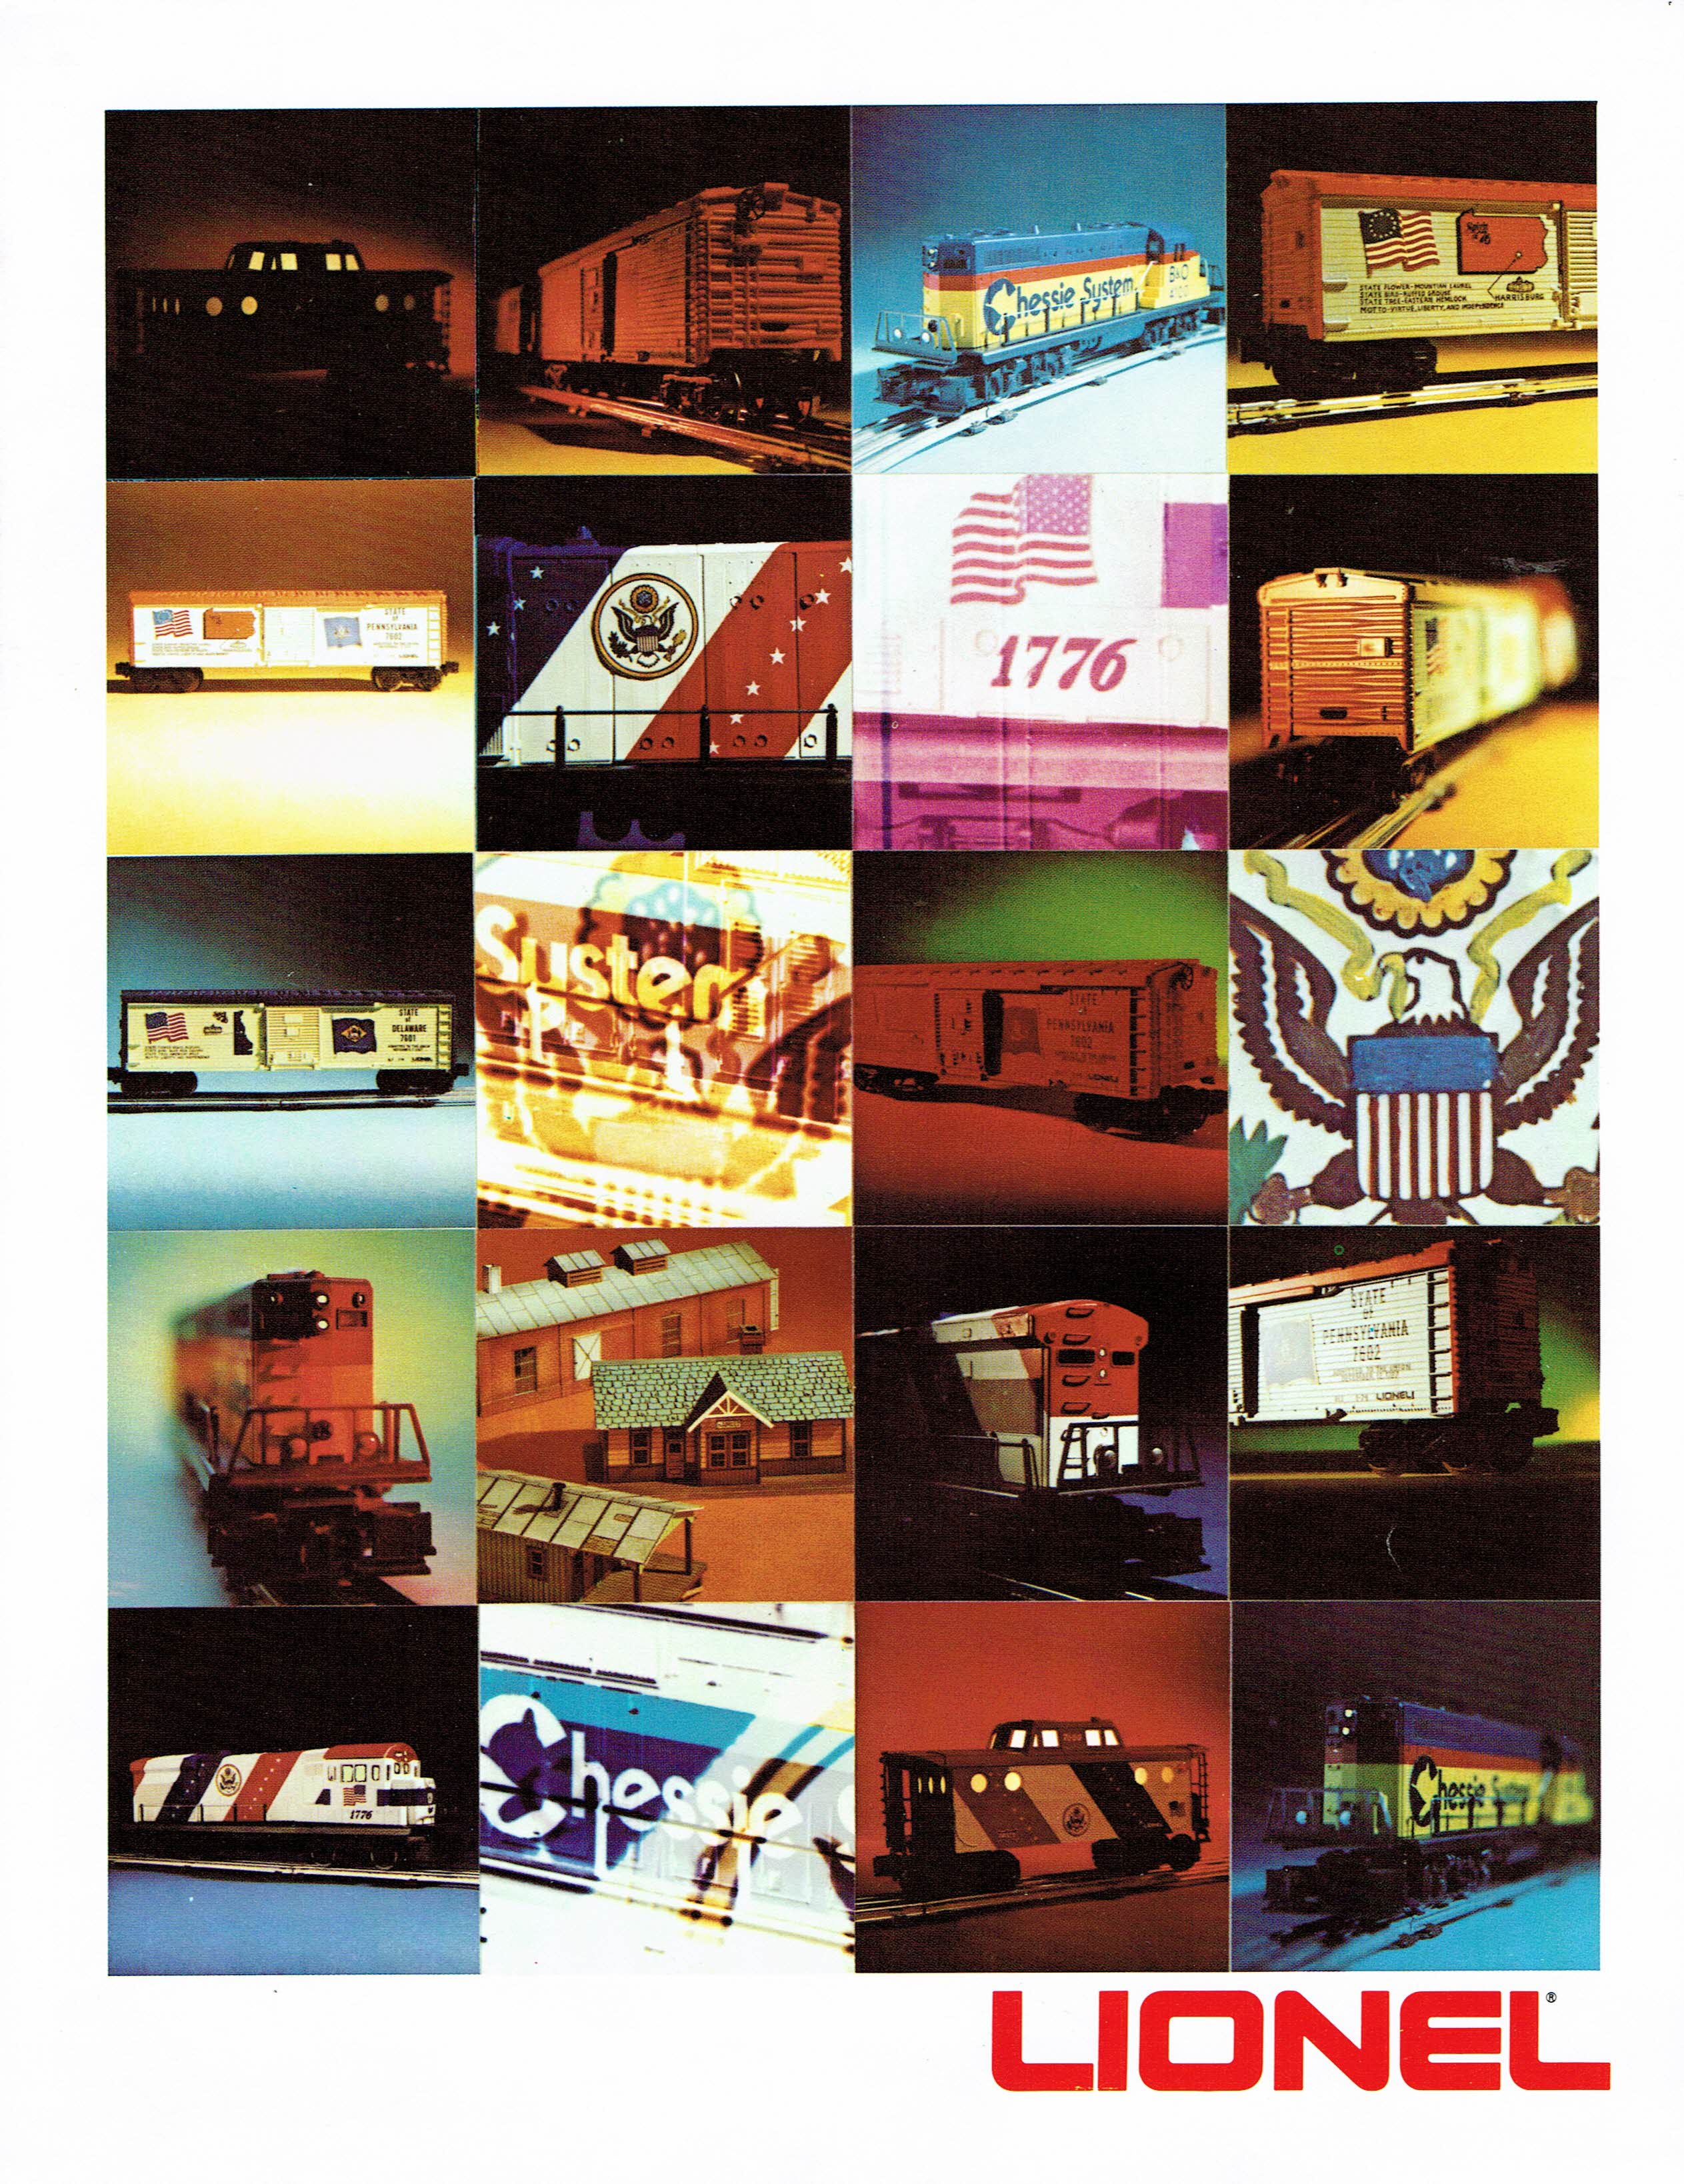 Lionel 1976 (Spirit of 76 Commemorative Series) Flier image